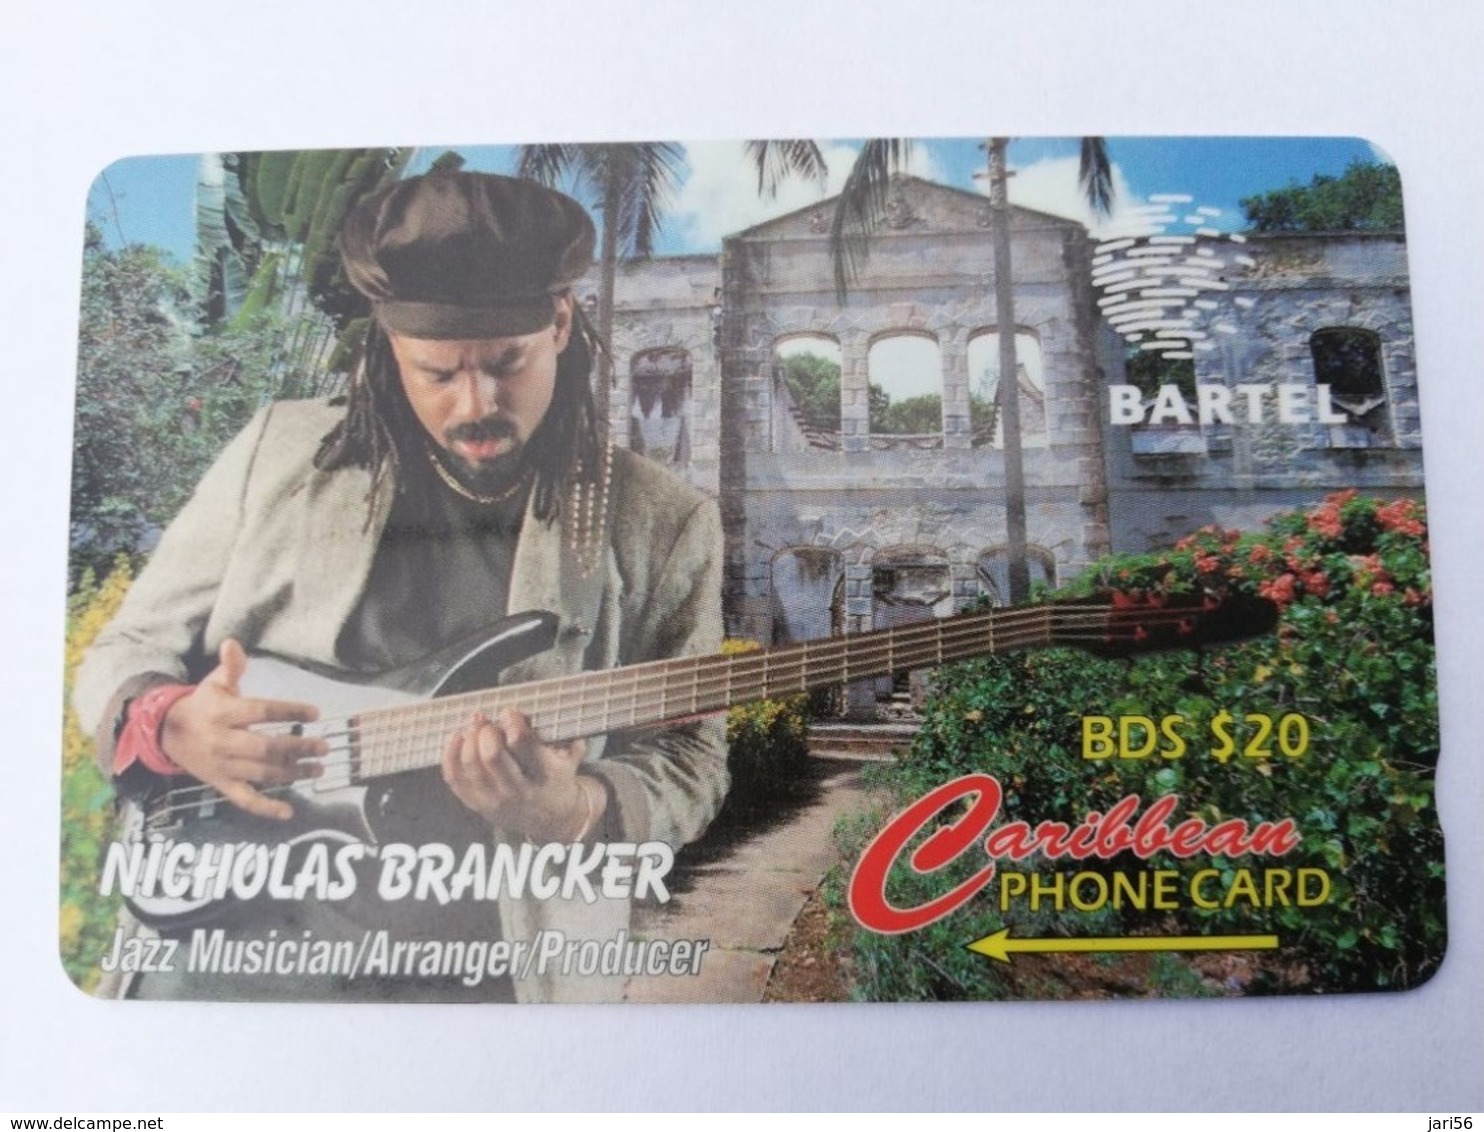 BARBADOS   $20-  Gpt Magnetic     BAR-125D  12CBDD  NICHOLAS BRANCKER   NEW  LOGO   Very Fine Used  Card  ** 2908** - Barbados